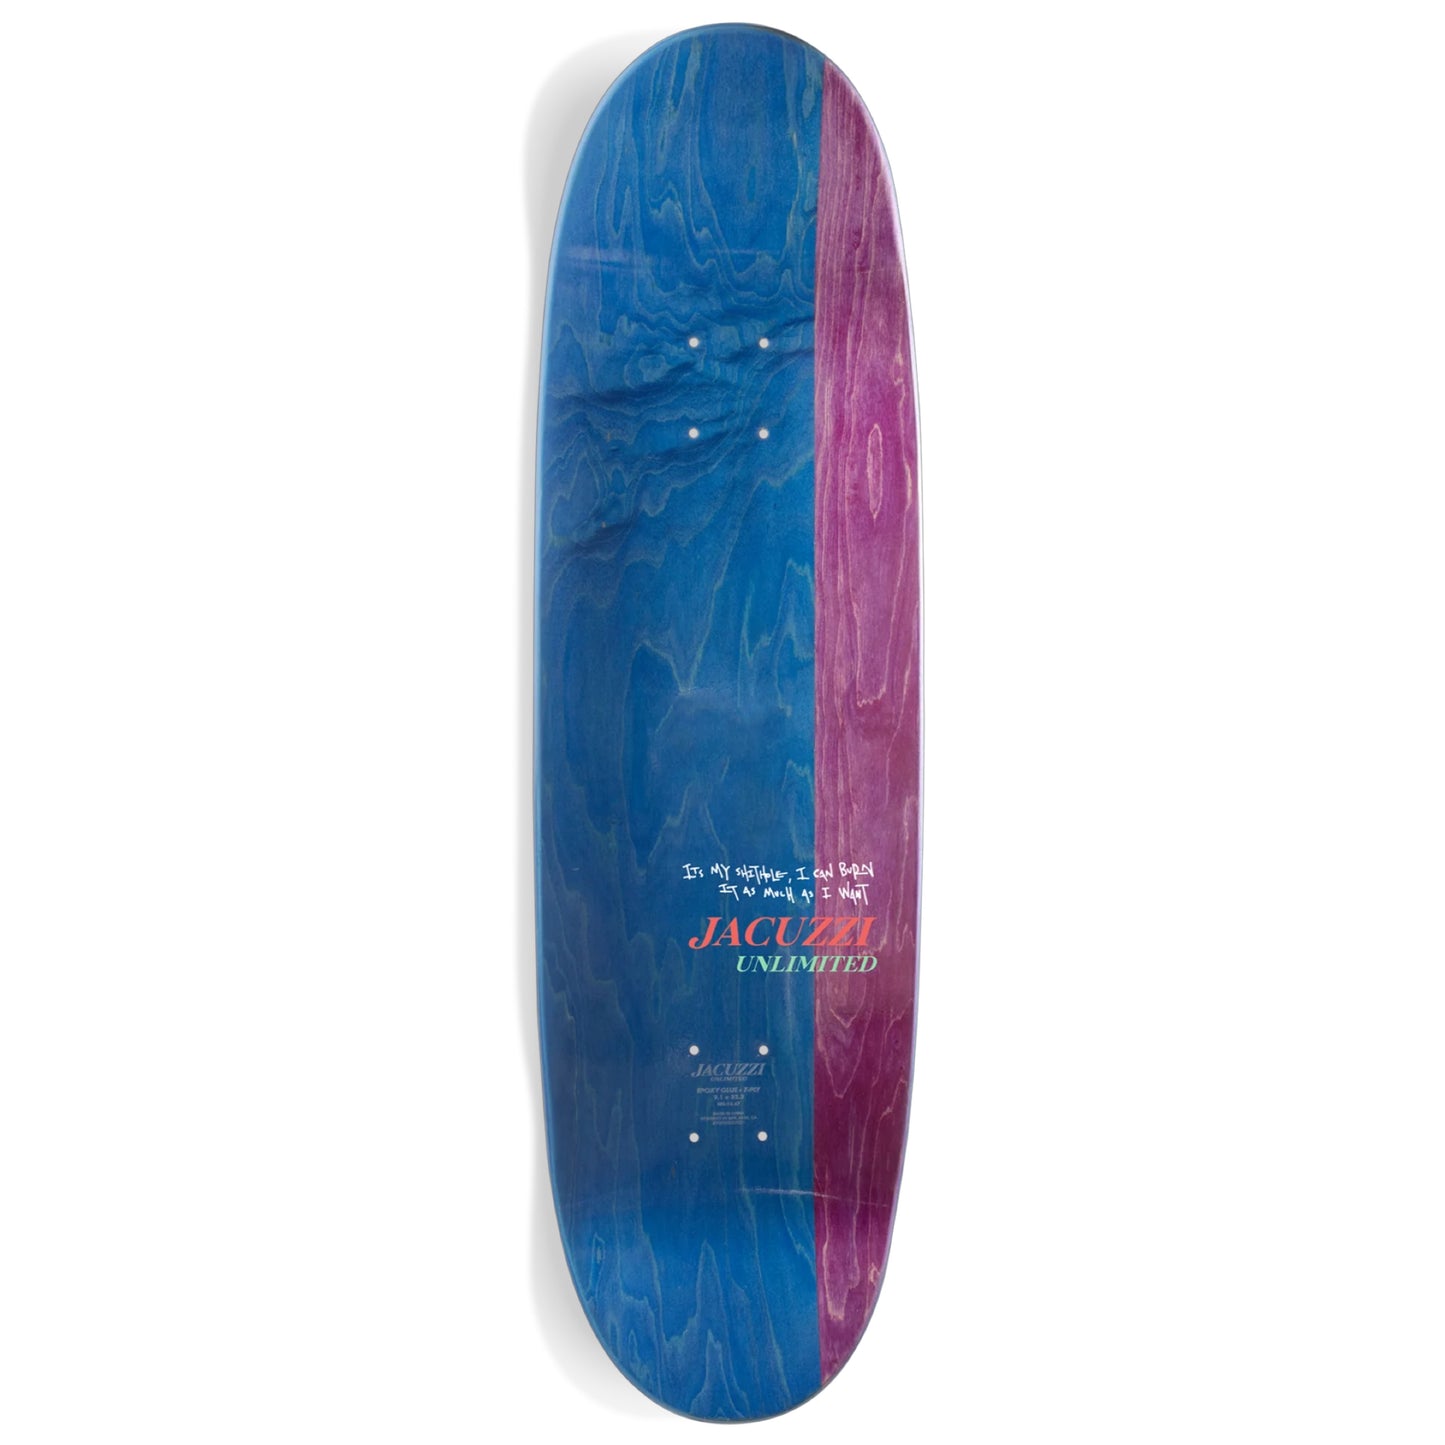 Jacuzzi Jackson Pilz Lawn Fire 9.125” Egg Shaped Skateboard Deck